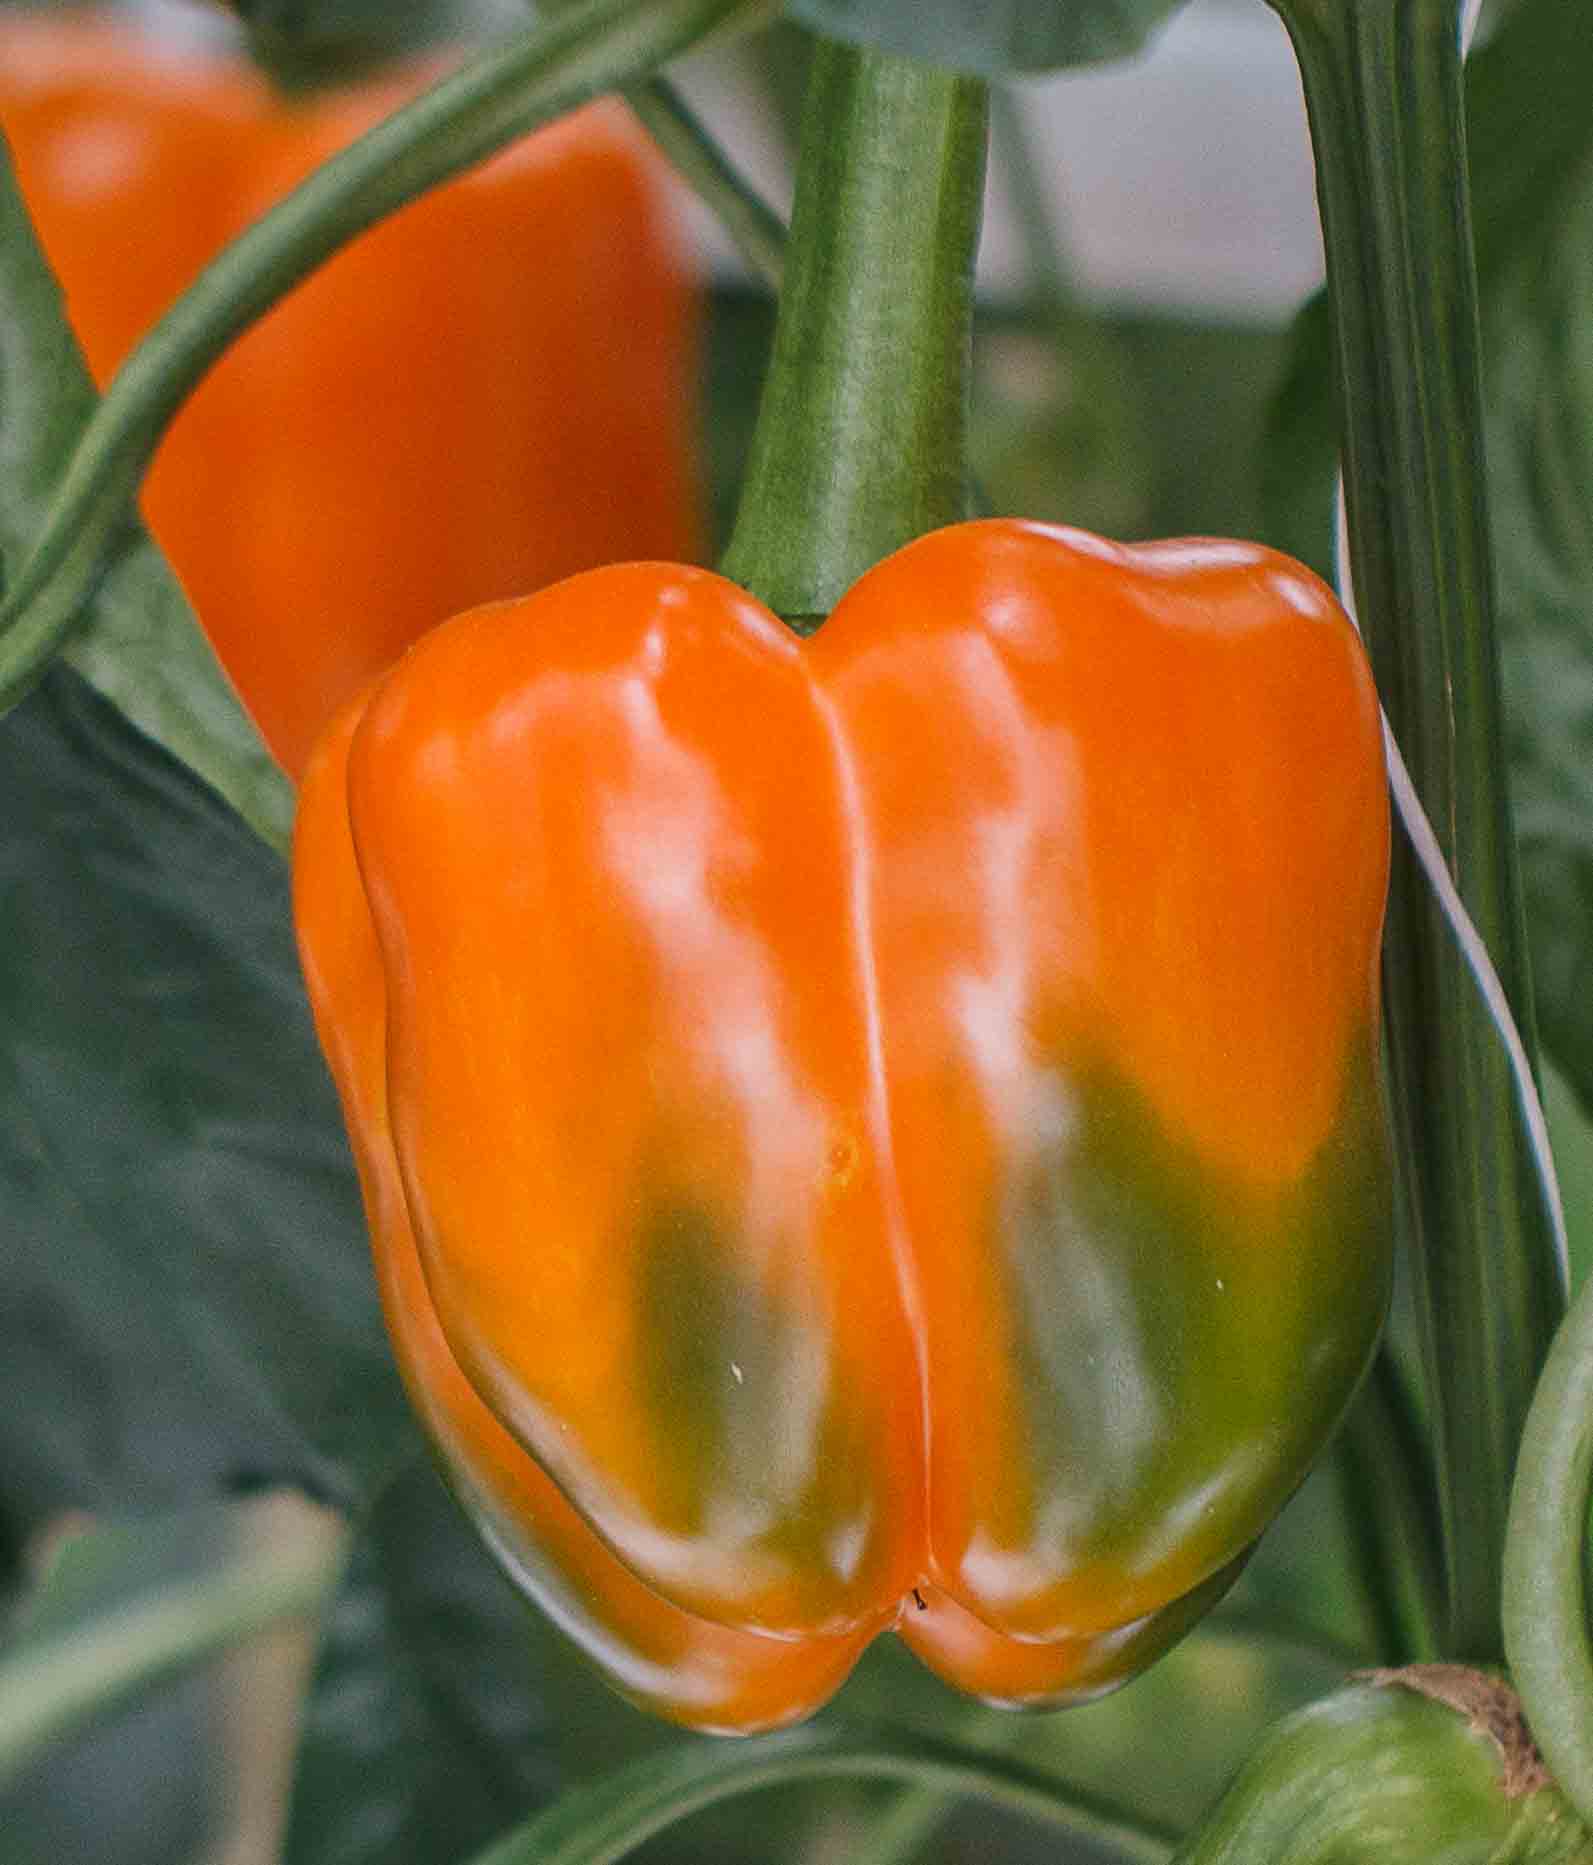 Orange Sun Sweet Pepper Seeds, 100 Heirloom Seeds Per Packet, Non GMO Seeds, Botanical Name: Capsicum annuum